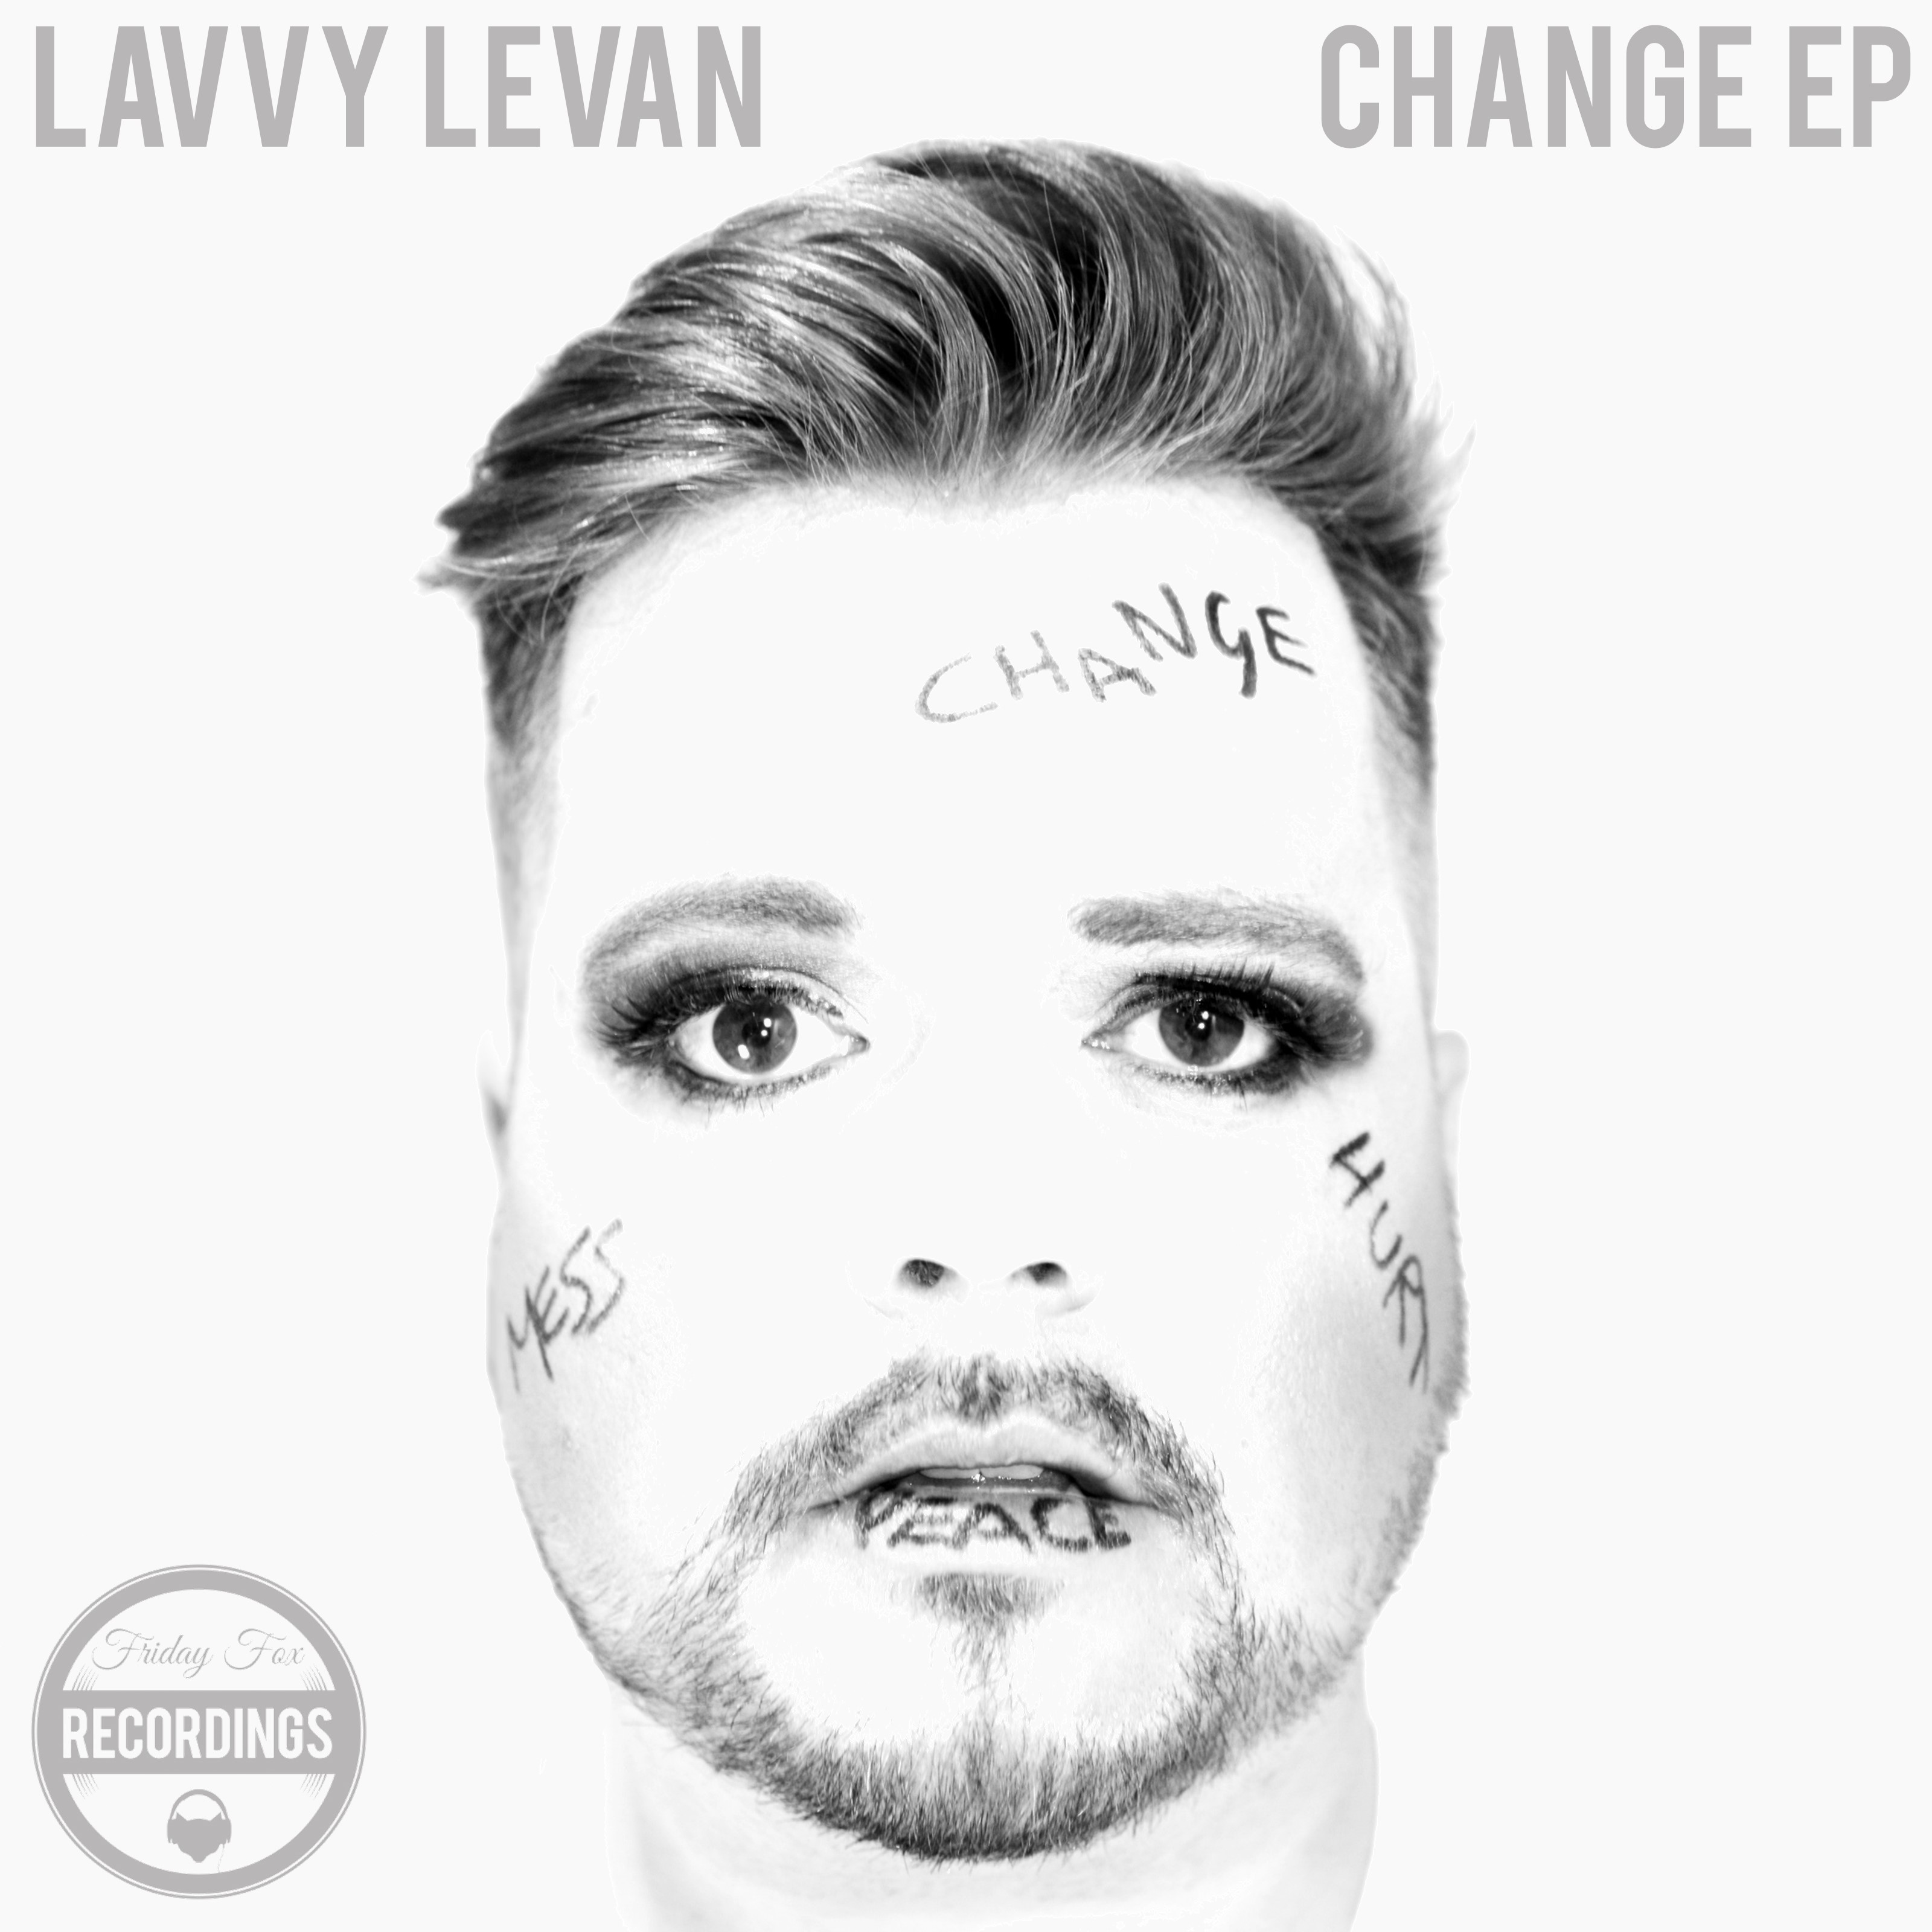 Lavvy Levan - Change EP / Friday Fox Recordings